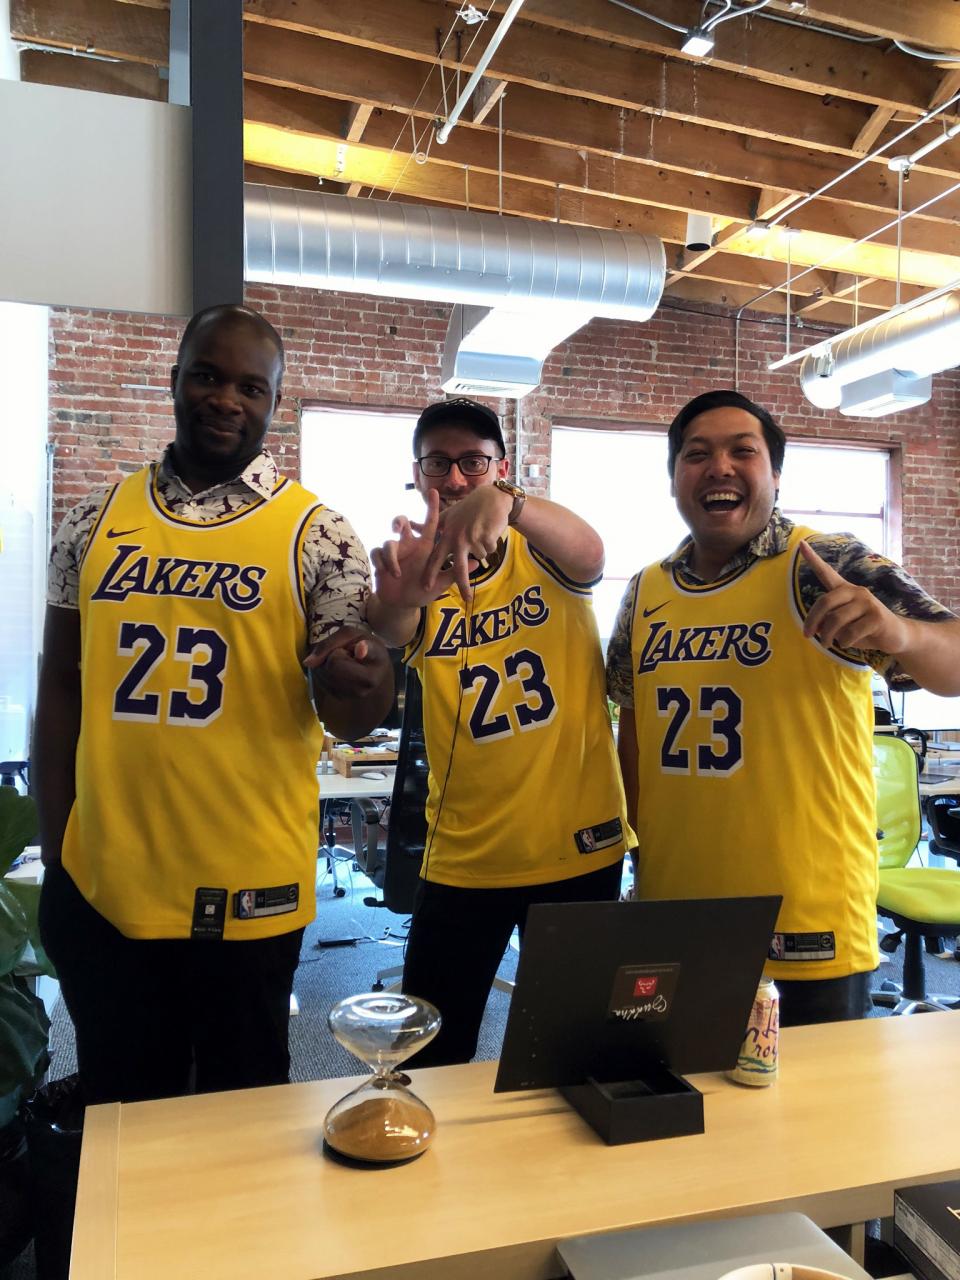 LA Lakers Fans in our San Francisco Office